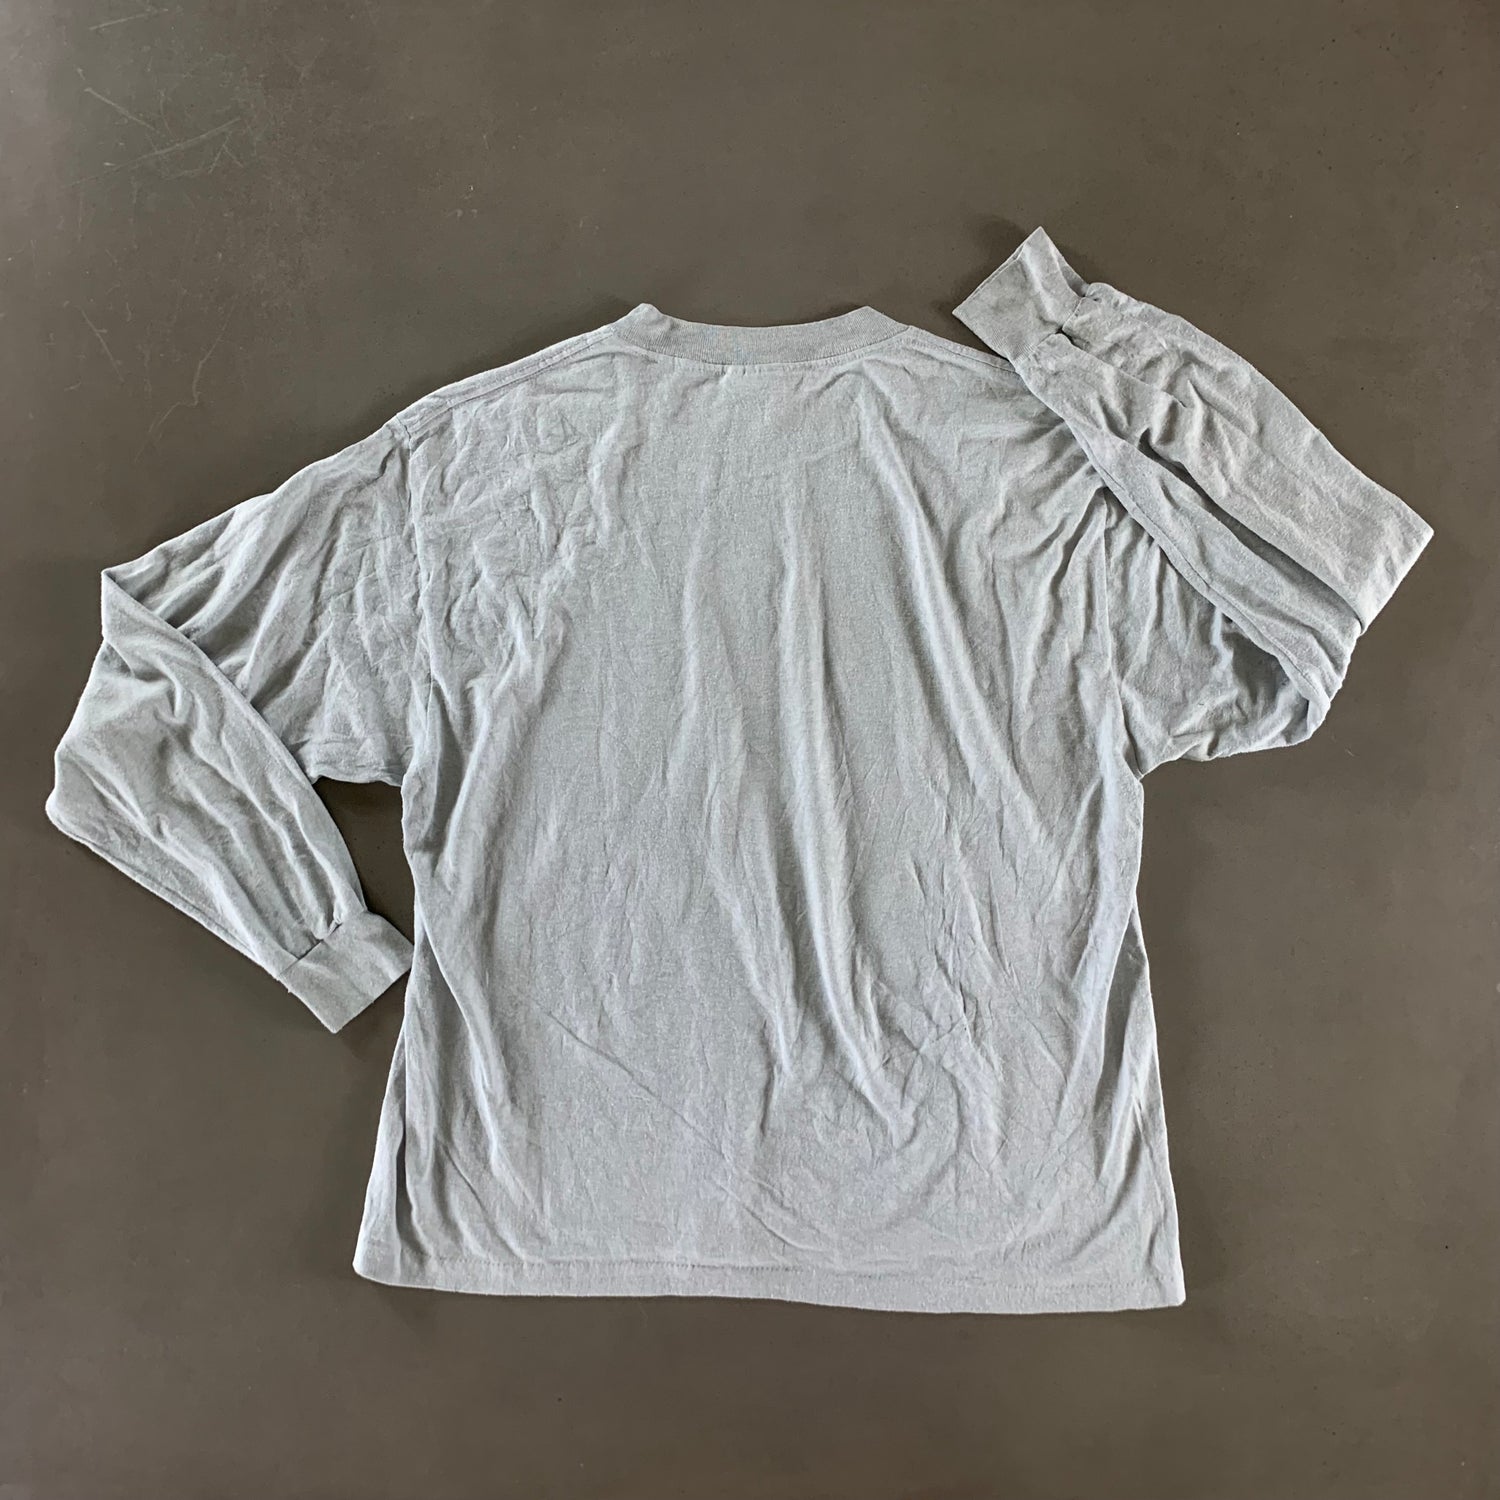 Vintage 1987 Rafting T-shirt size XL